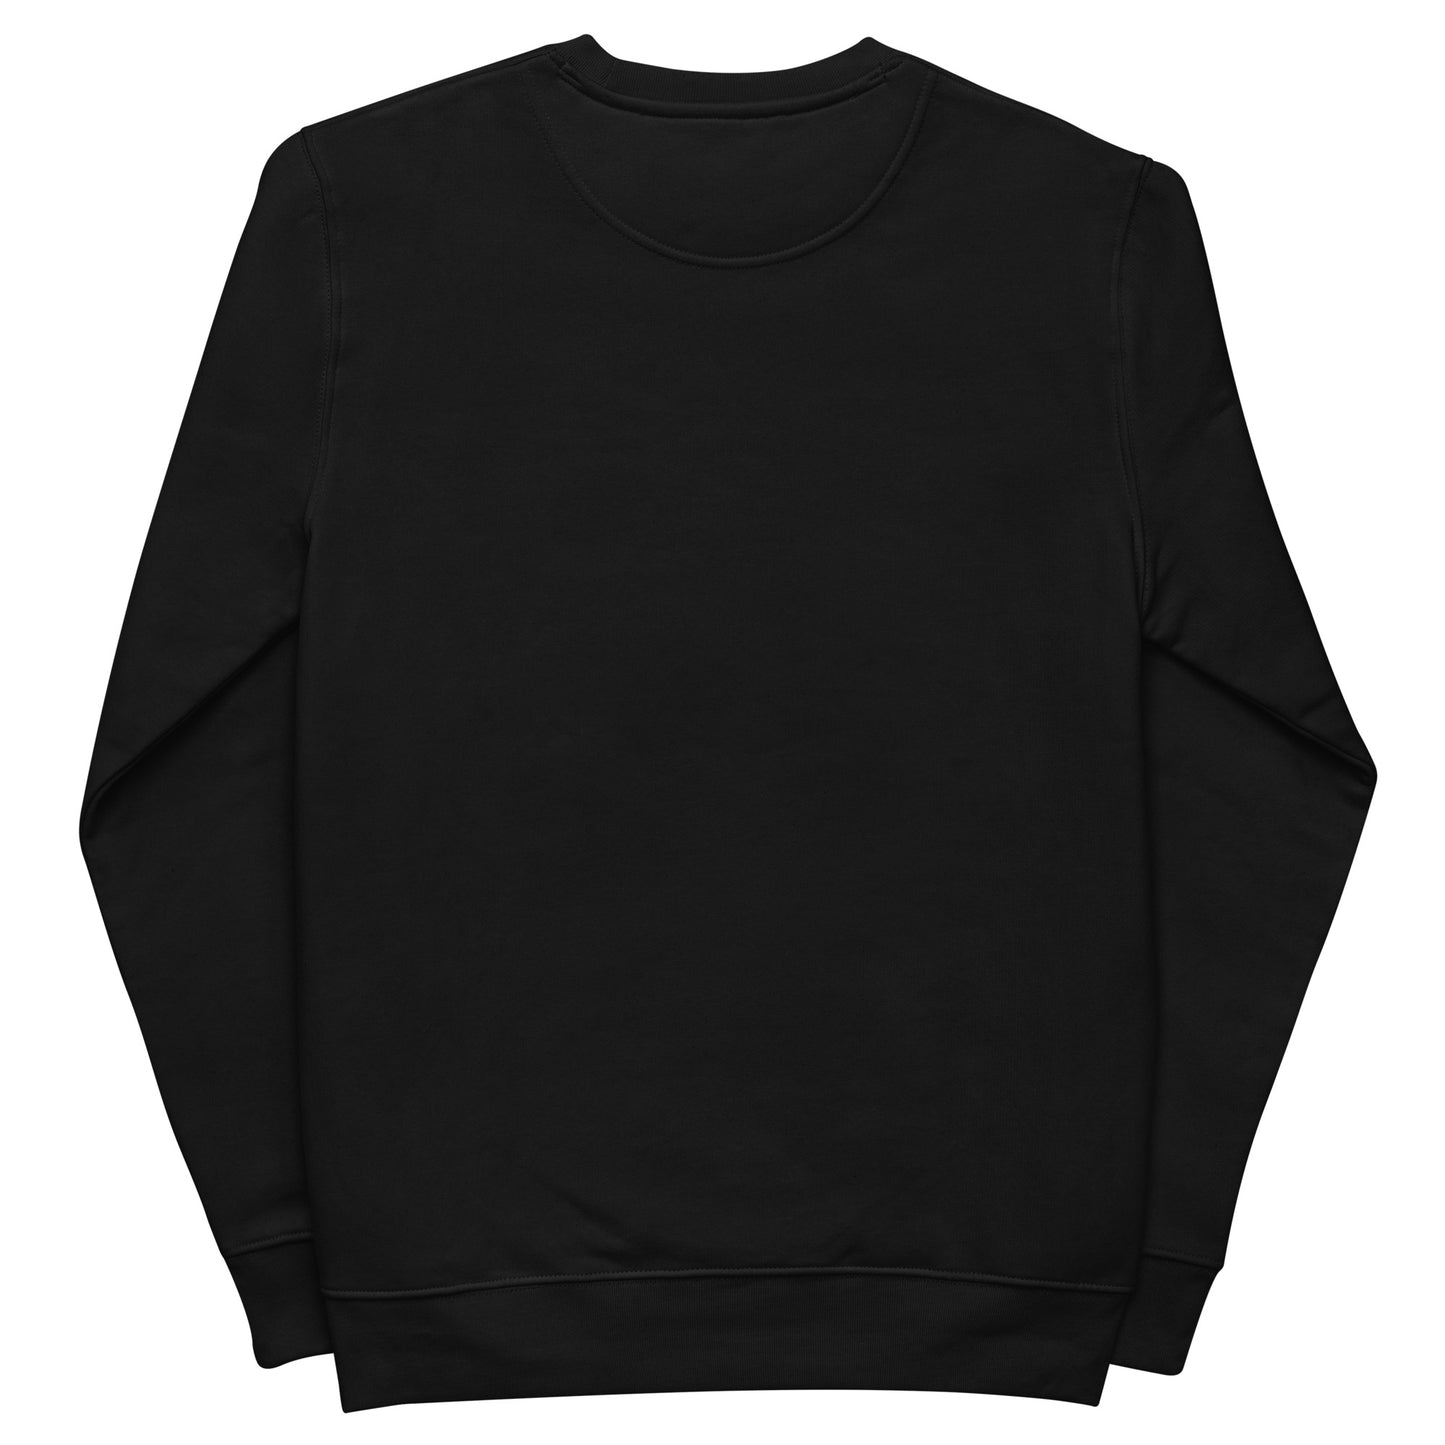 Hustle (v2) Unisex eco sweatshirt (White Text)